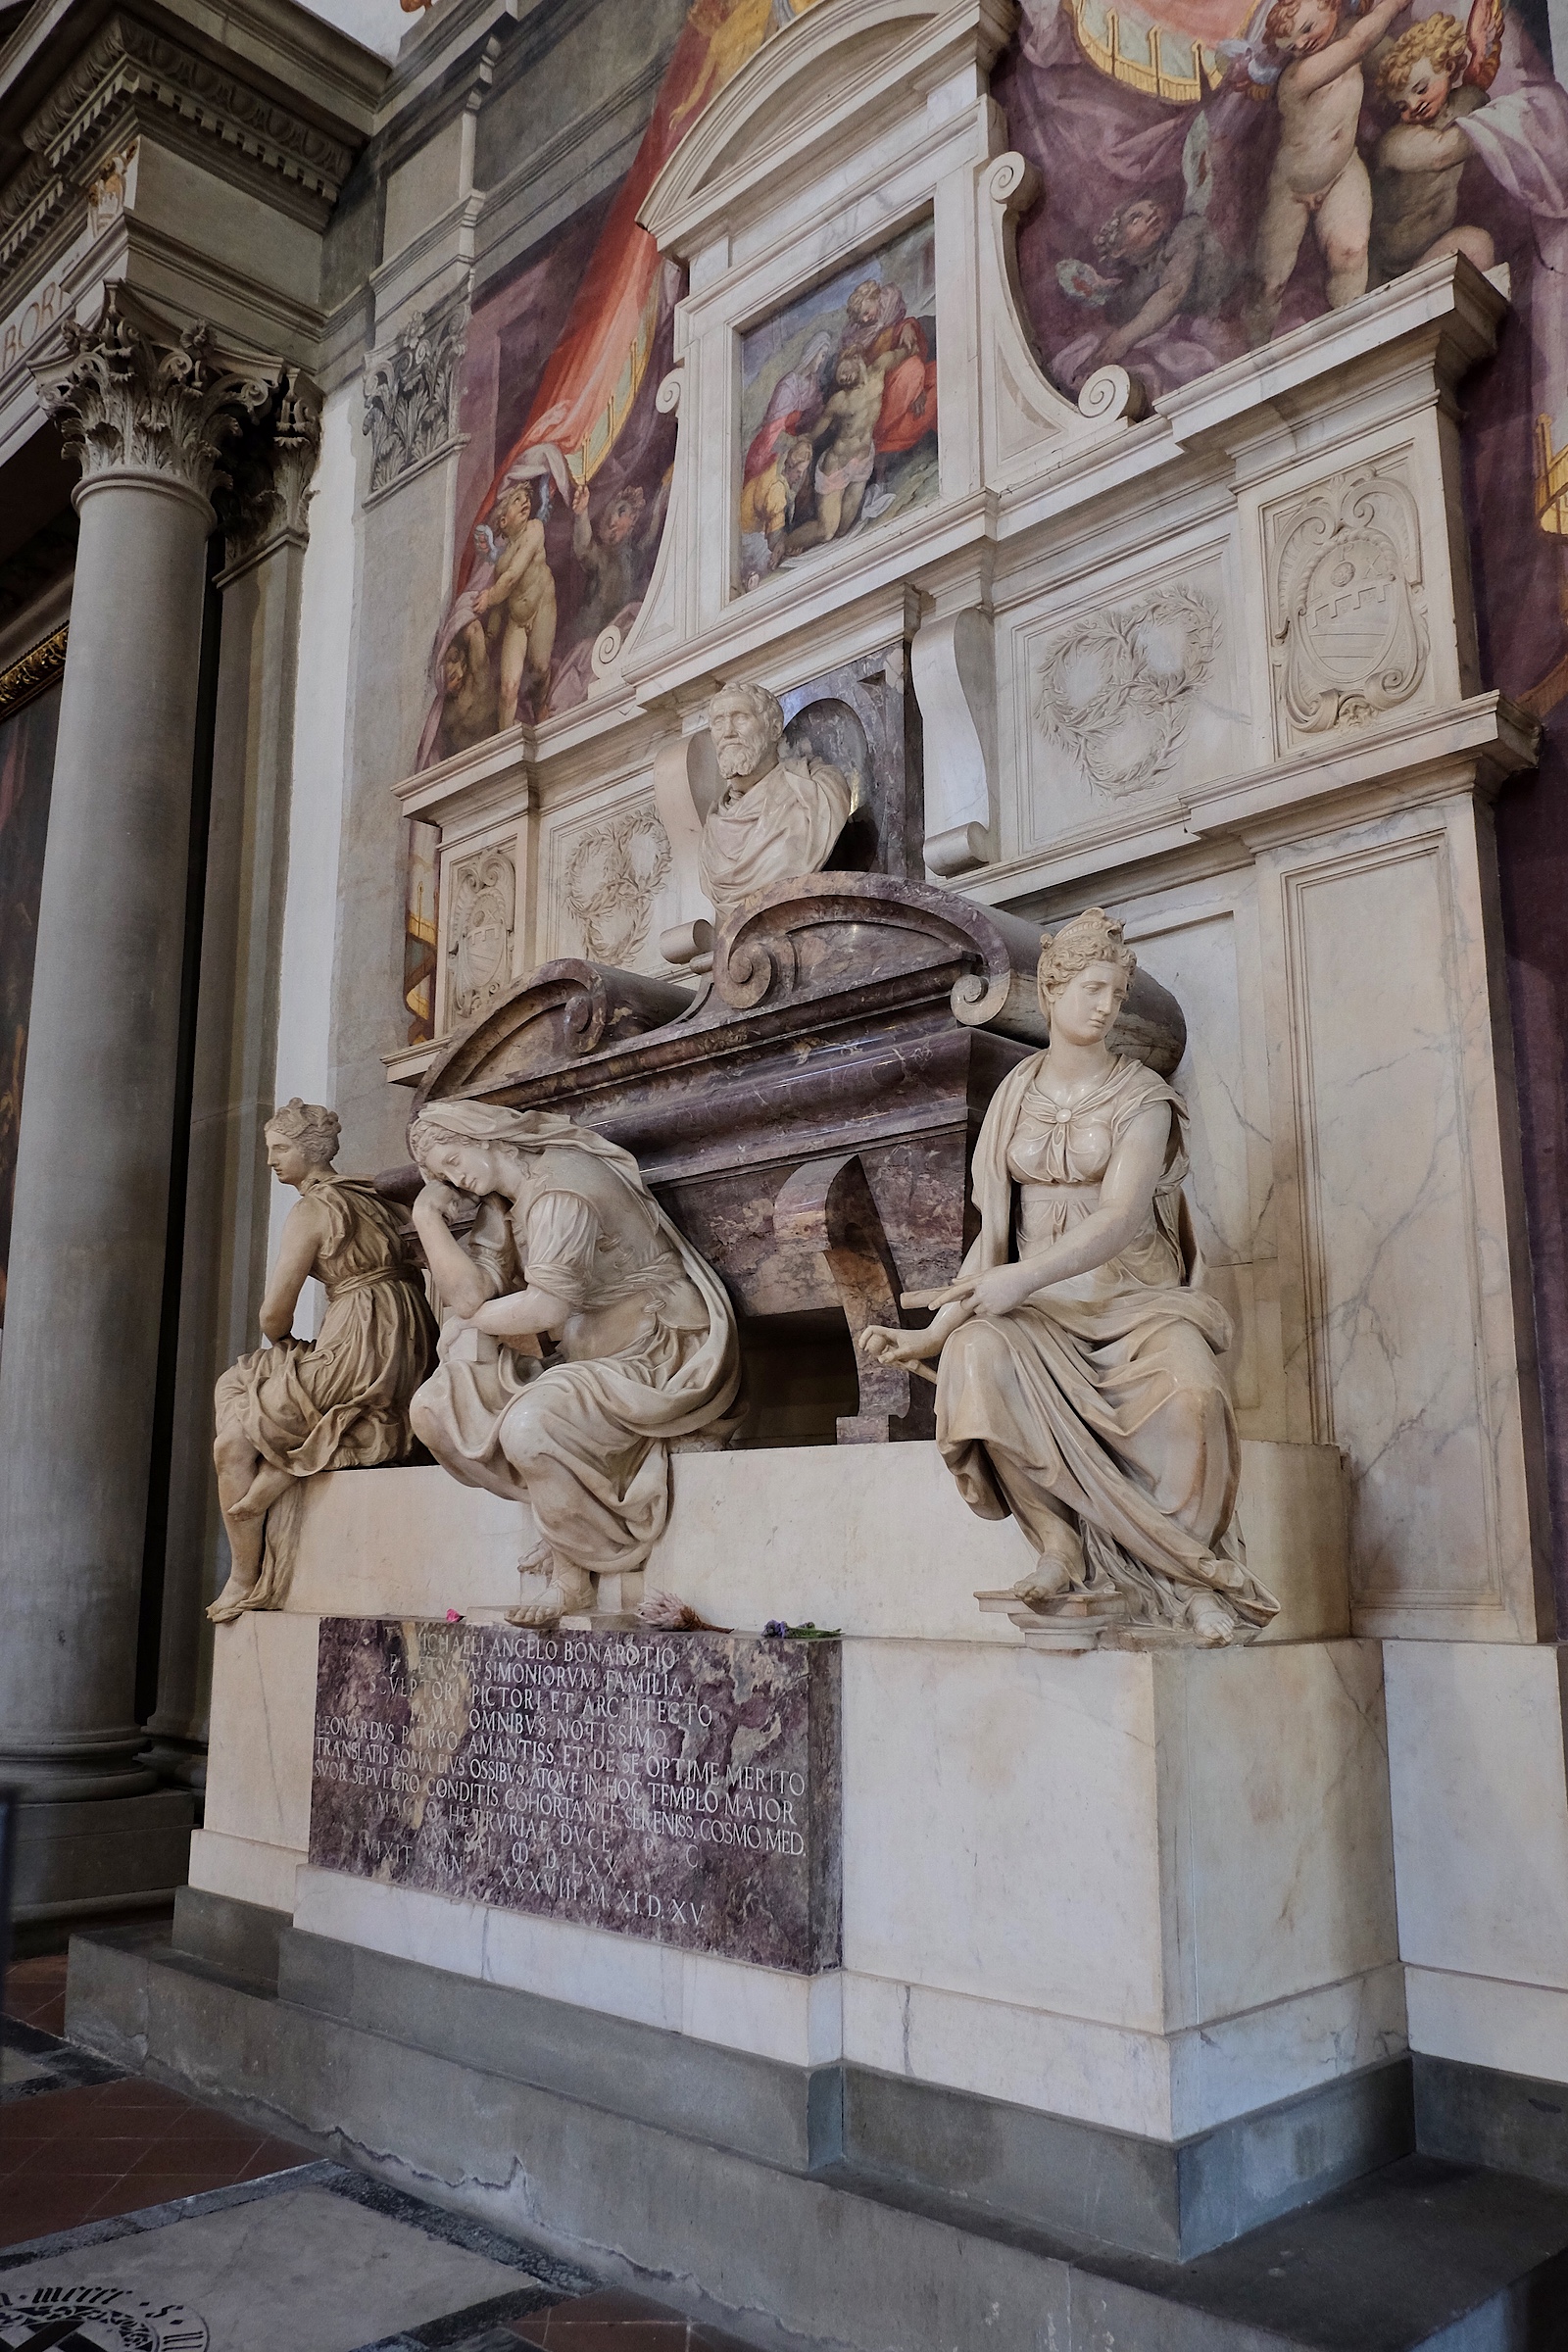 The tomb of Michelangelo in Santa Croce.